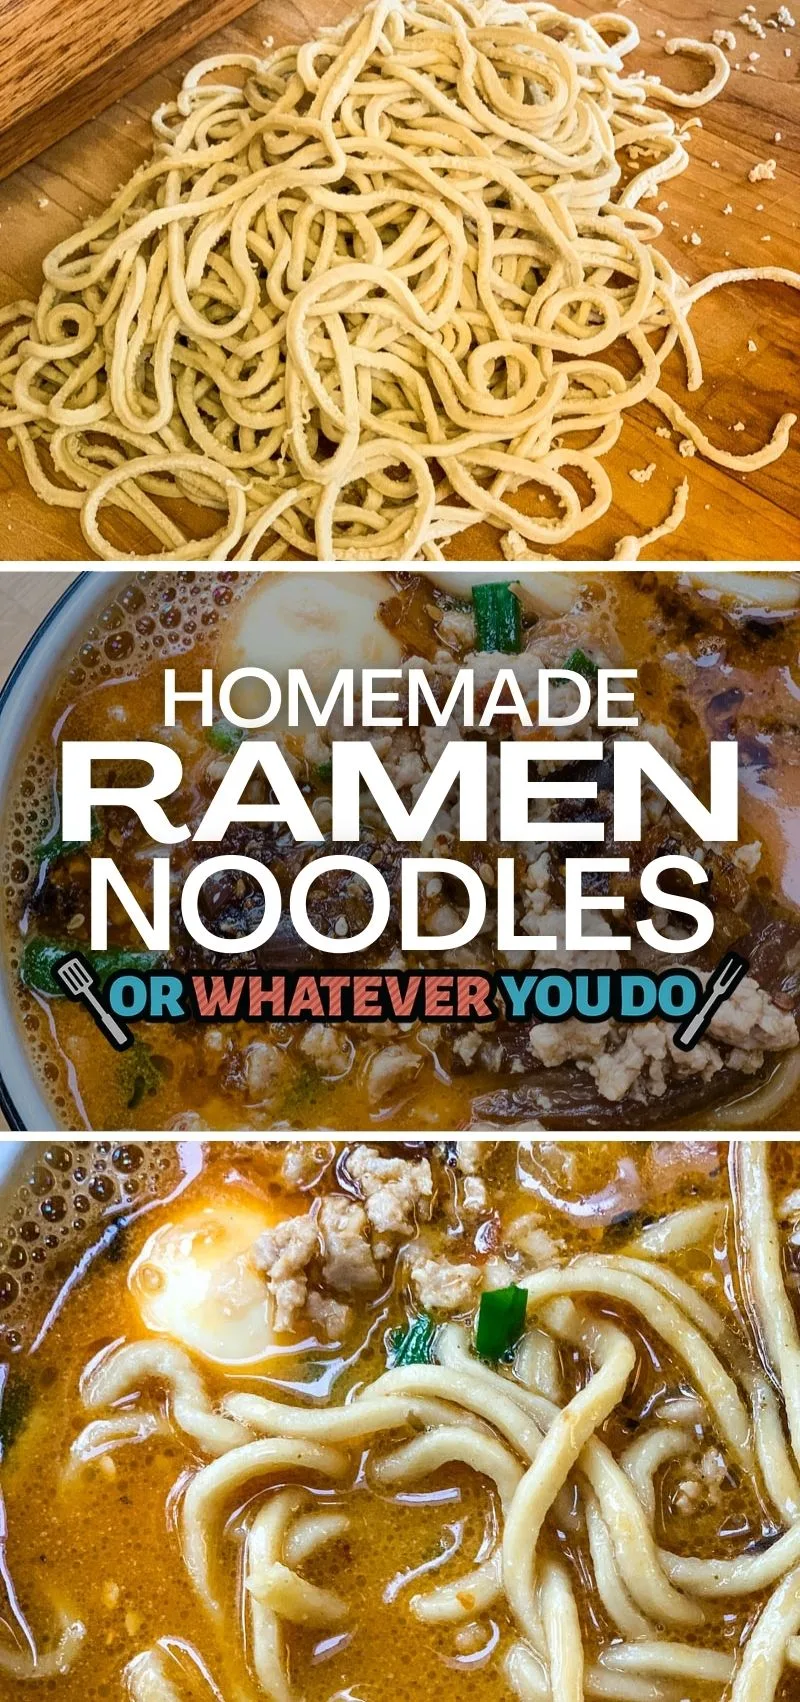 https://www.orwhateveryoudo.com/wp-content/uploads/2018/11/Homemade-Ramen-Noodles-FB.jpg.webp